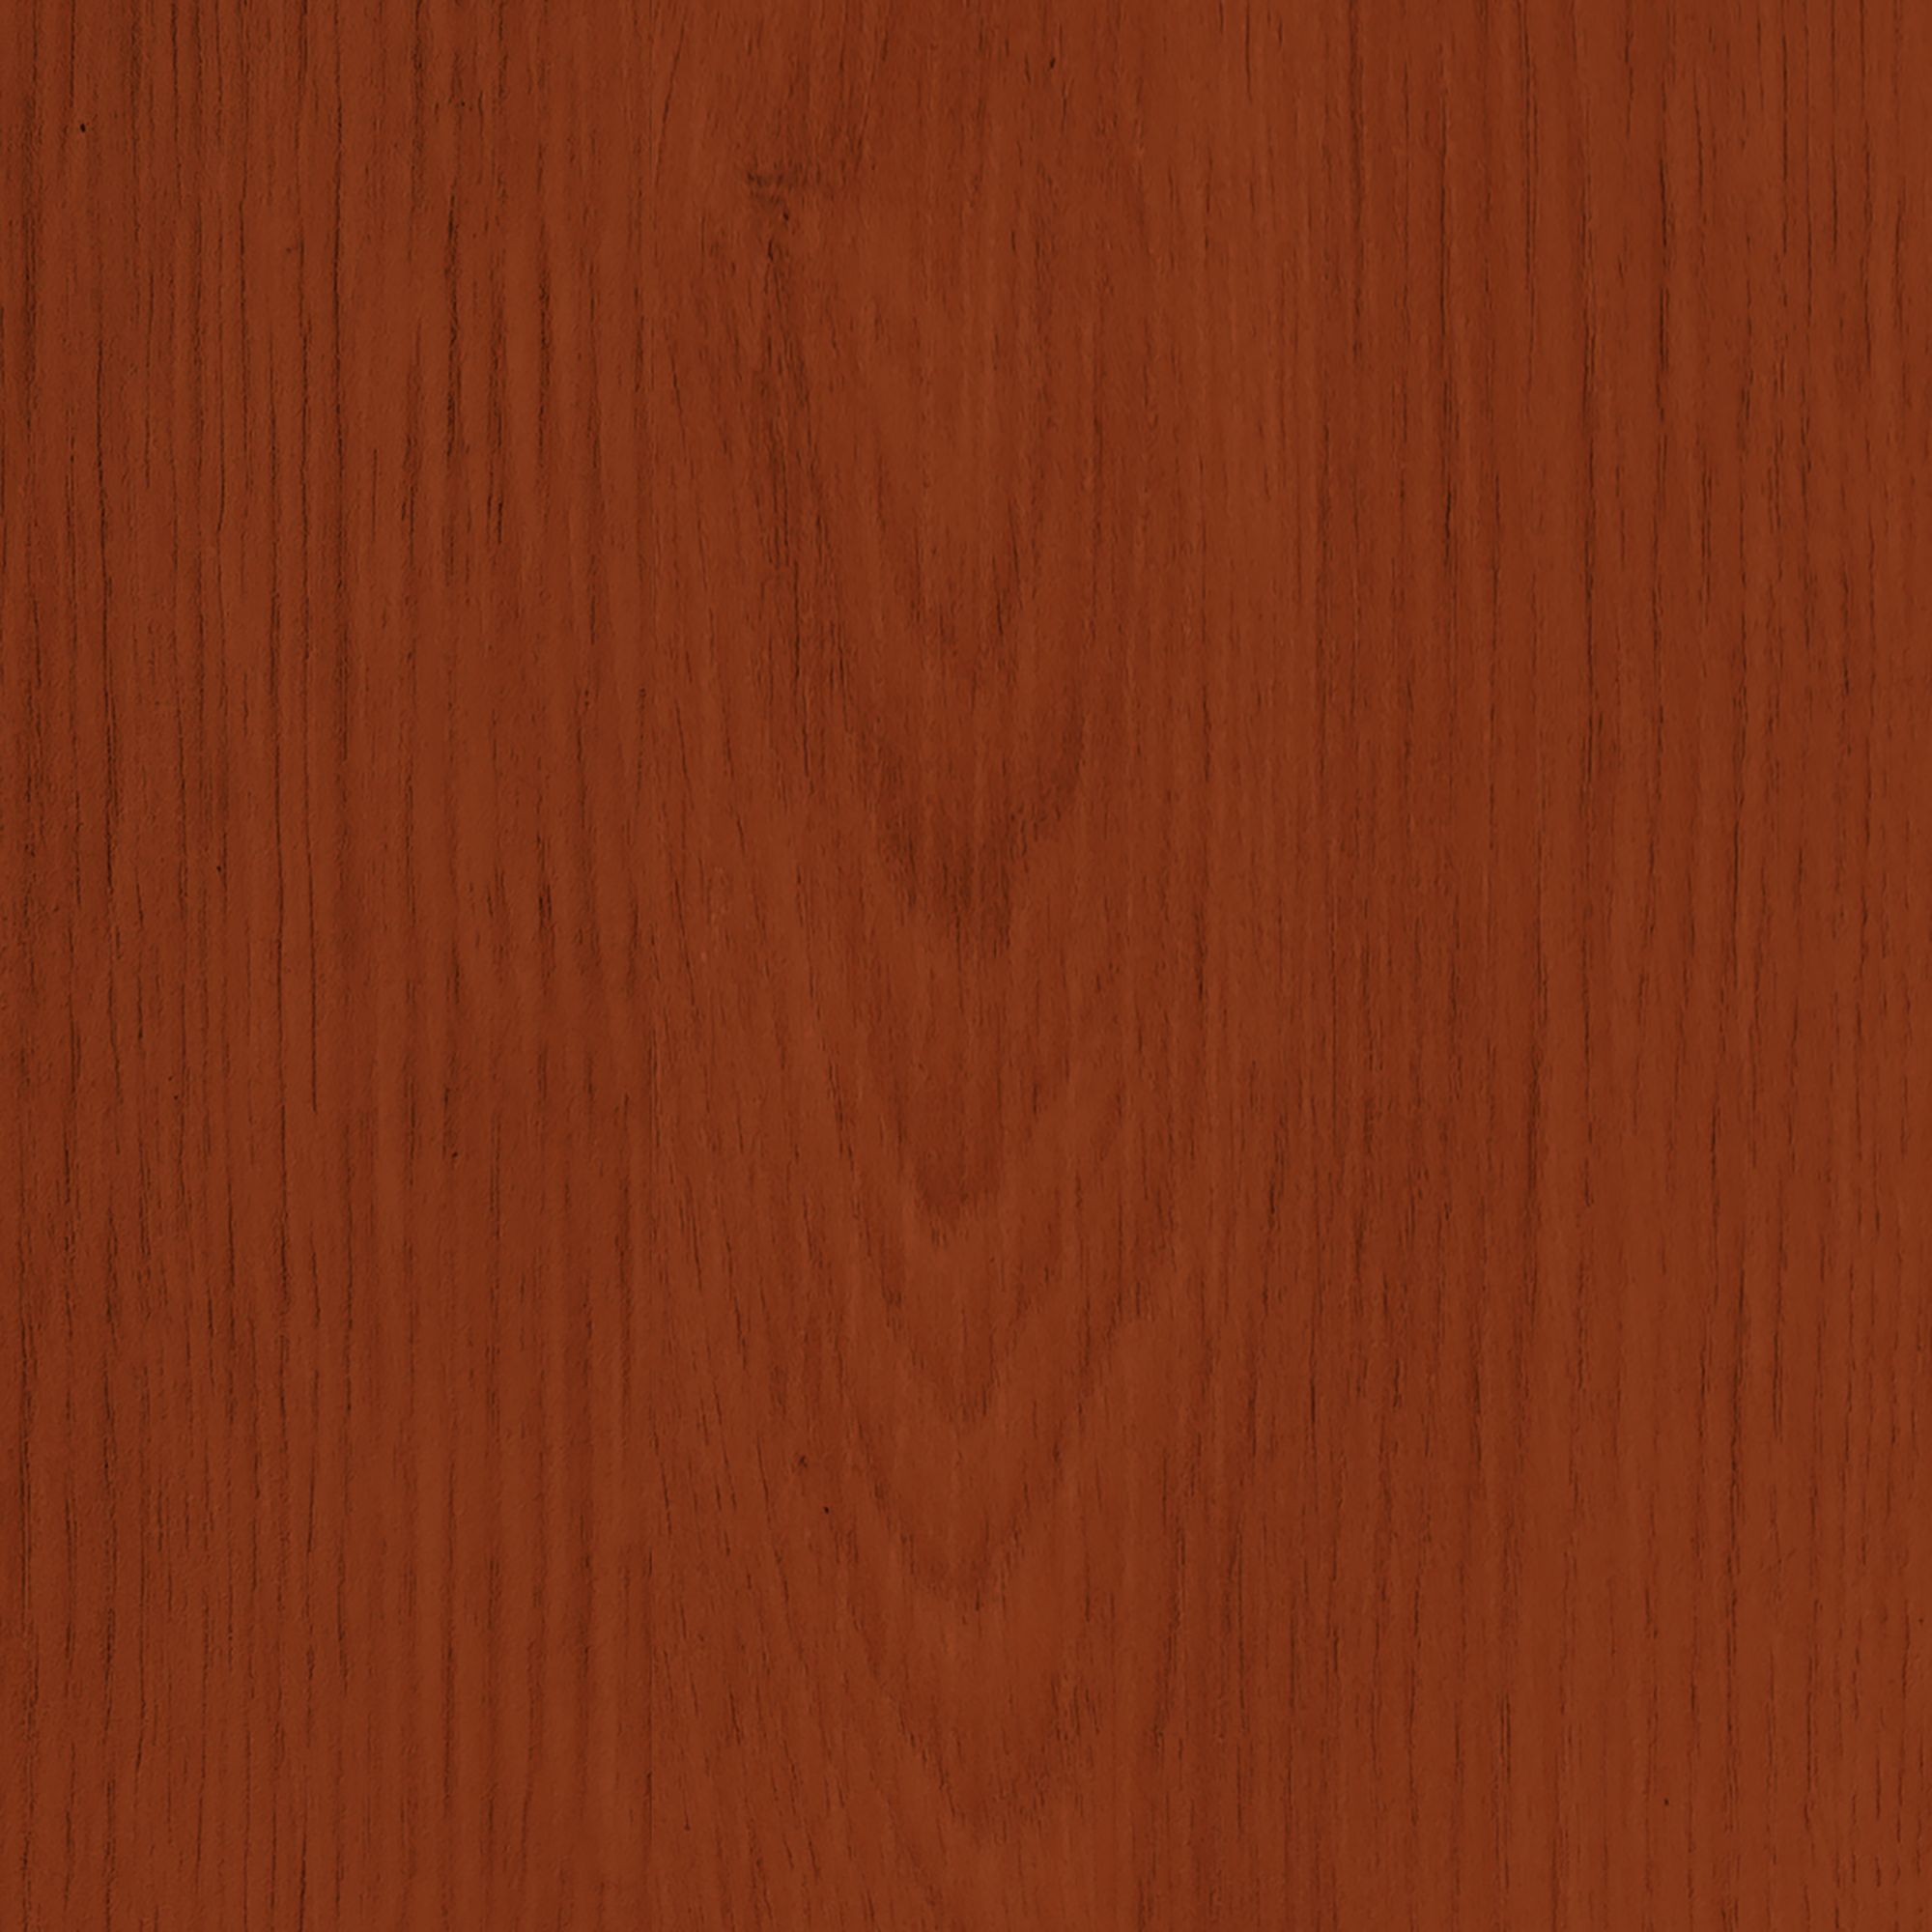 GoodHome Mahogany Satin Multi-surface Furniture Wood varnish, 250ml